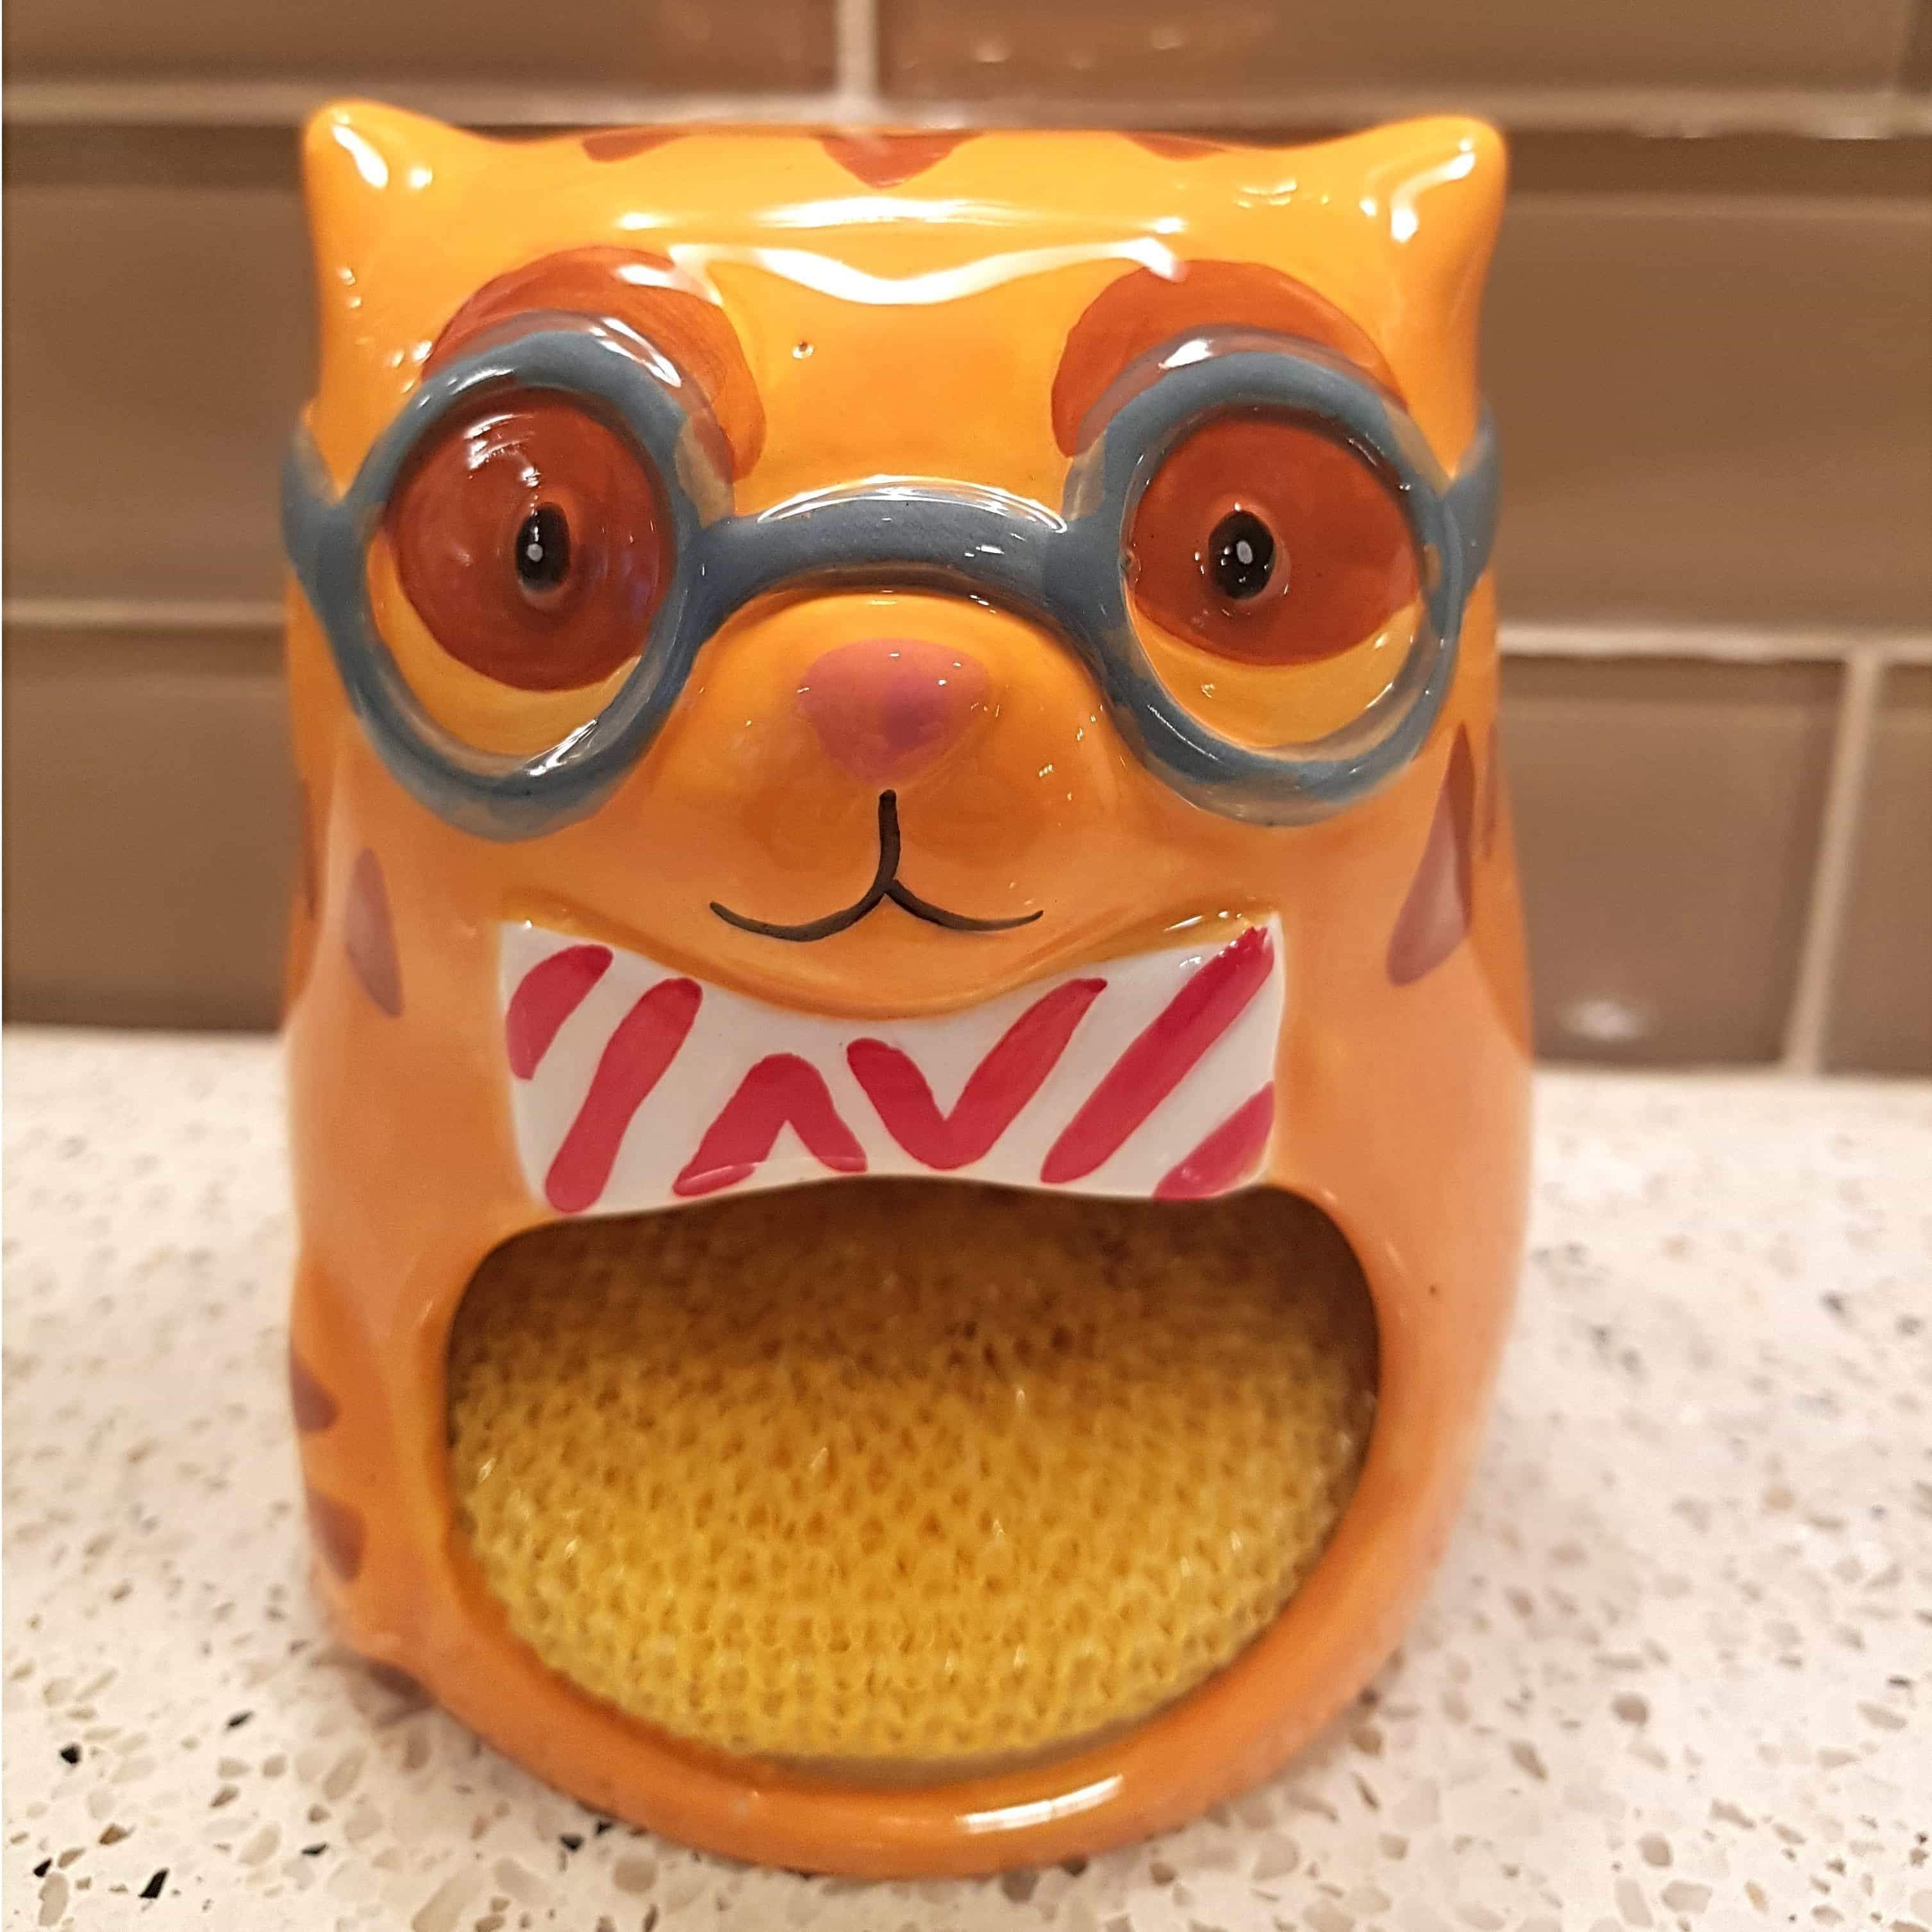 Cat Kitchen Decor, Cute Cat Sponge Holder Made of Porcelain